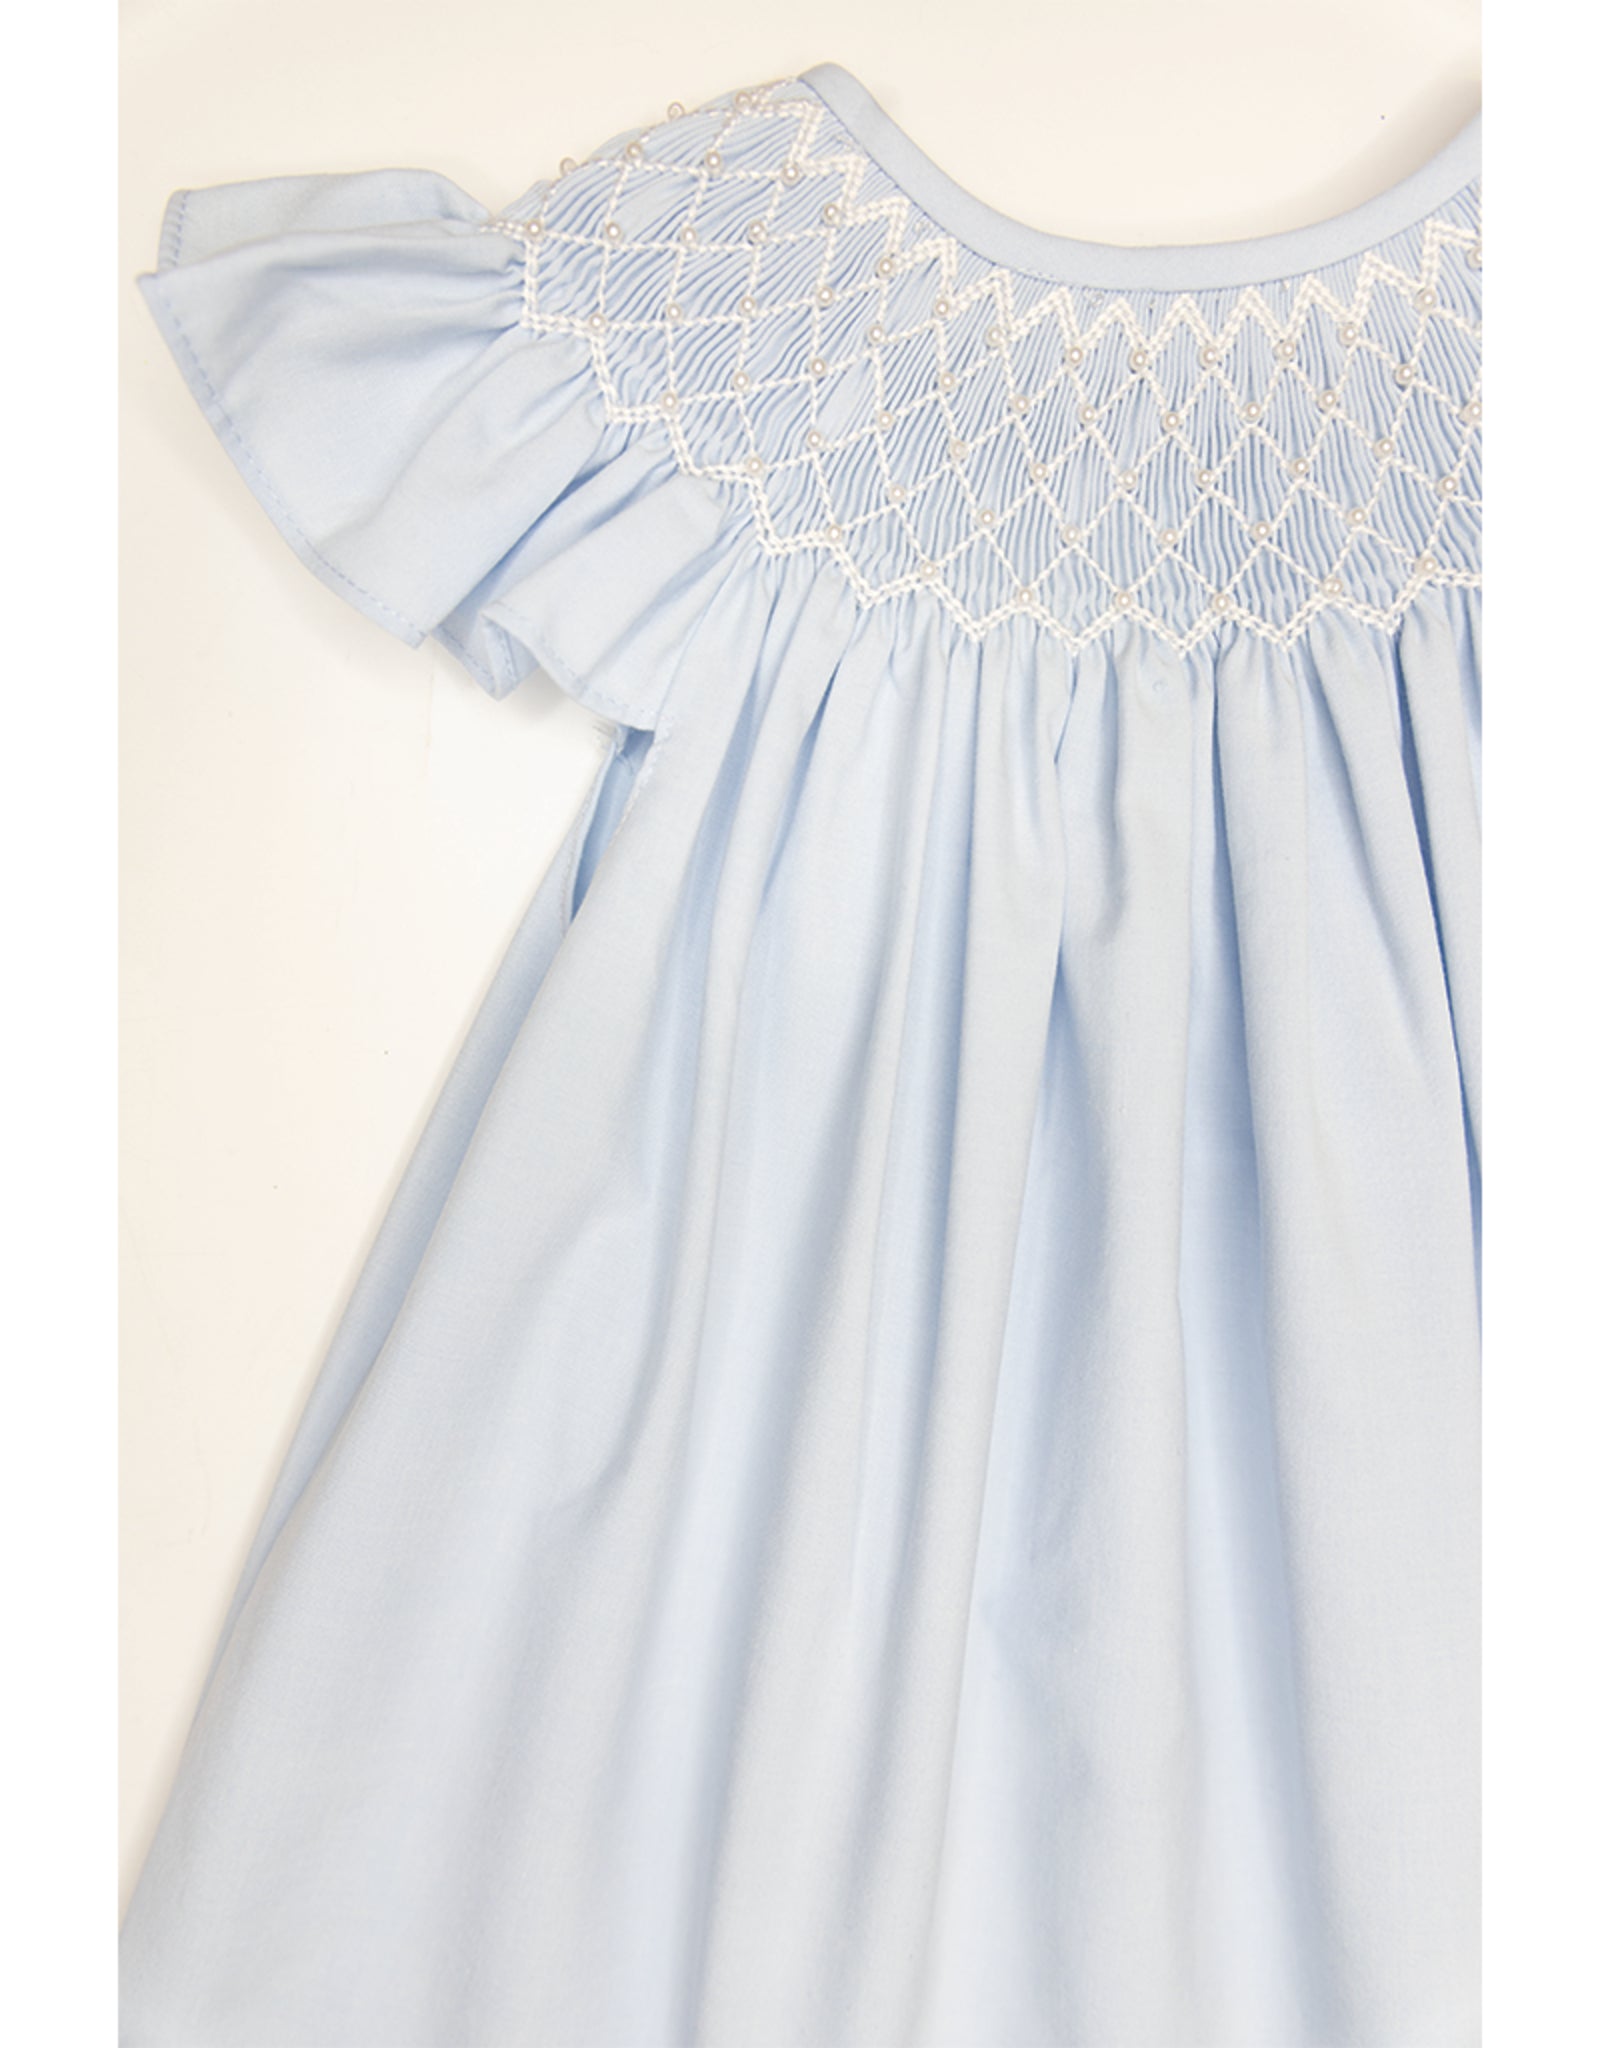 CATHERINE BLUE PEARL SMOCKED DRESS